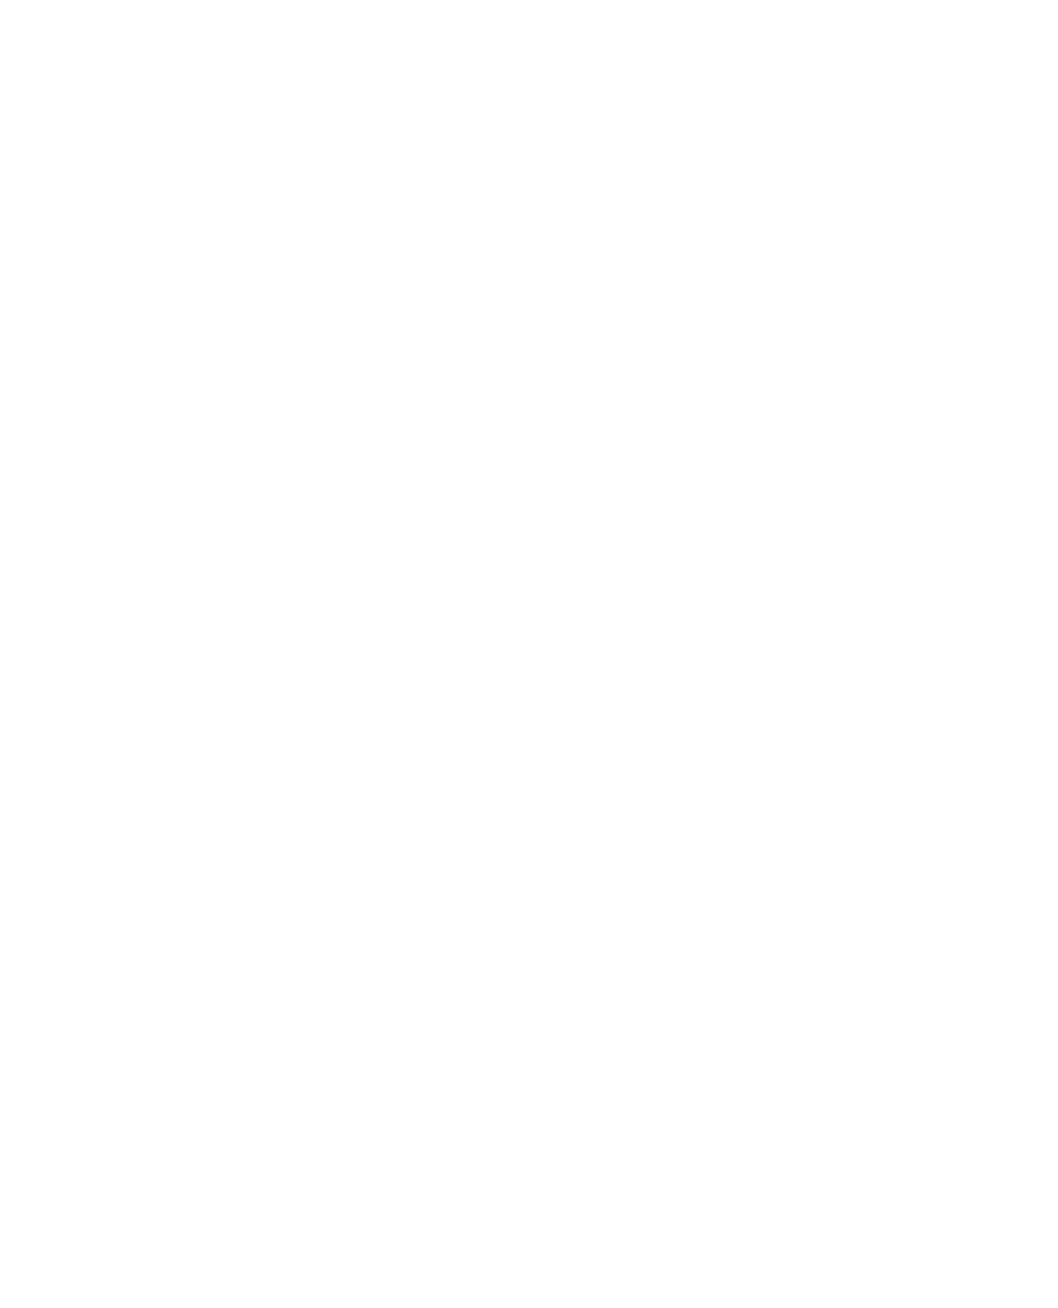 Black on Black Films added a new photo. - Black on Black Films